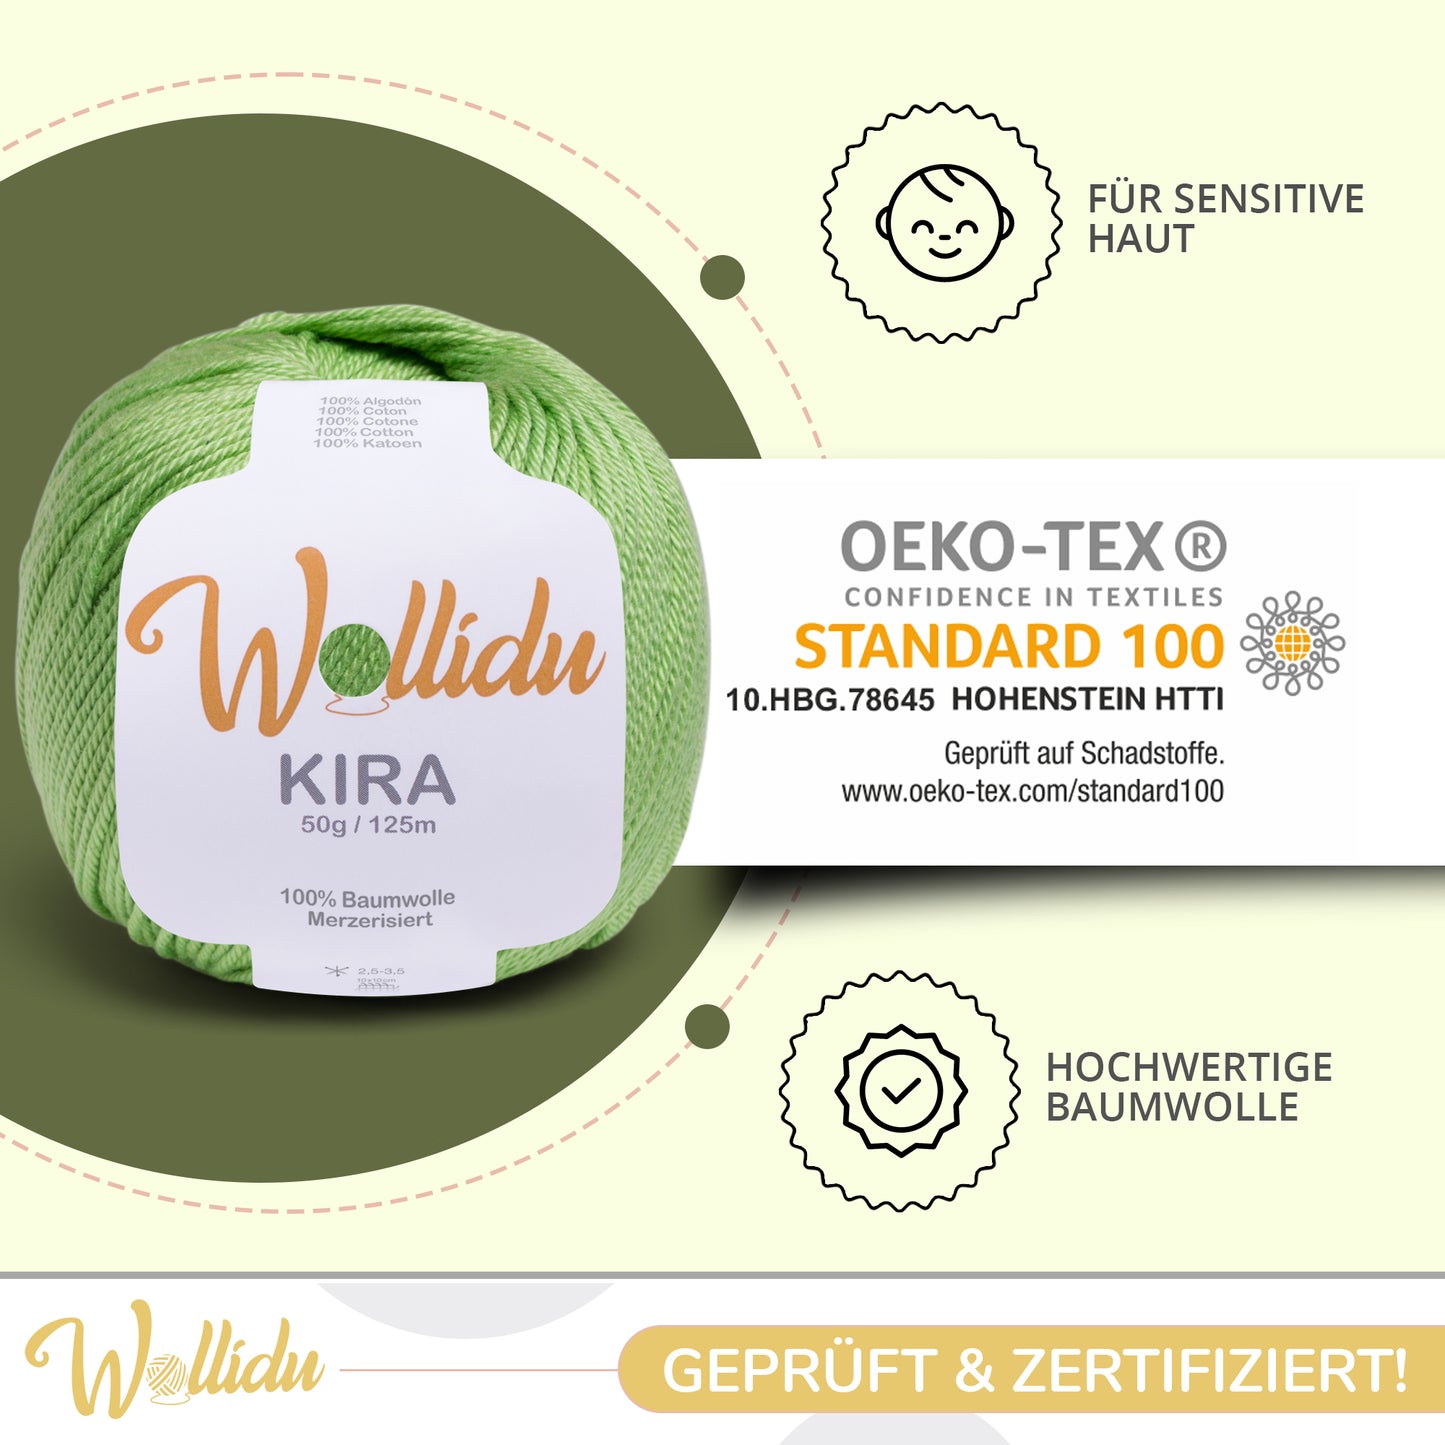 Wollidu Kira 10er Set 100% Baumwolle mercirisiert - 10x 50g Häkelgarn Strickgarn Hellgrün